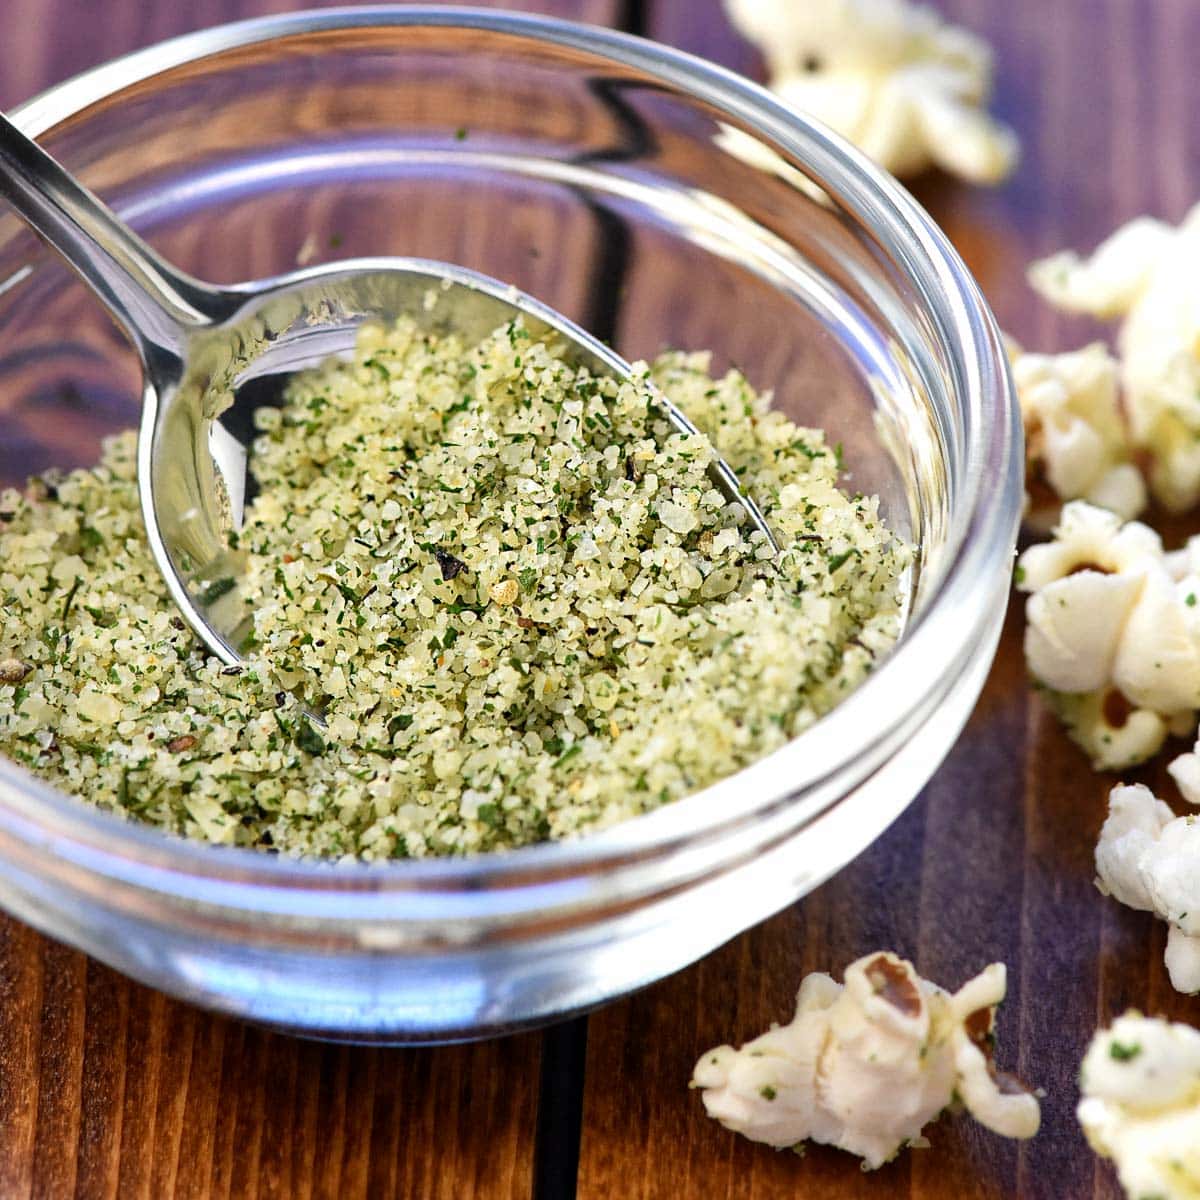 Parmesan Ranch Popcorn Recipe: How to Make It